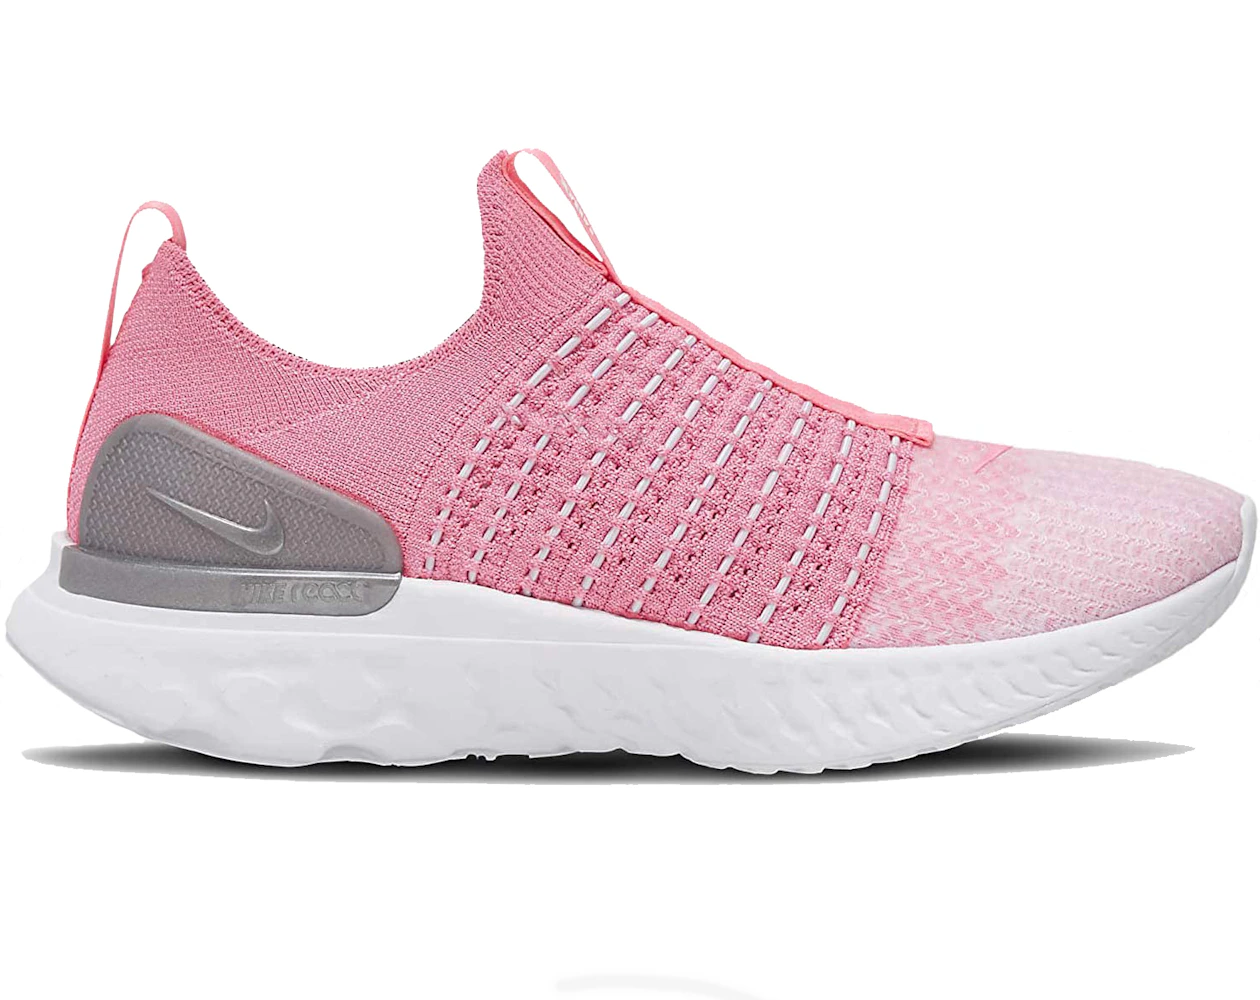 Nike React Phantom Run Flyknit 2 Pink Glow (Women's) - CJ0280-600 - US